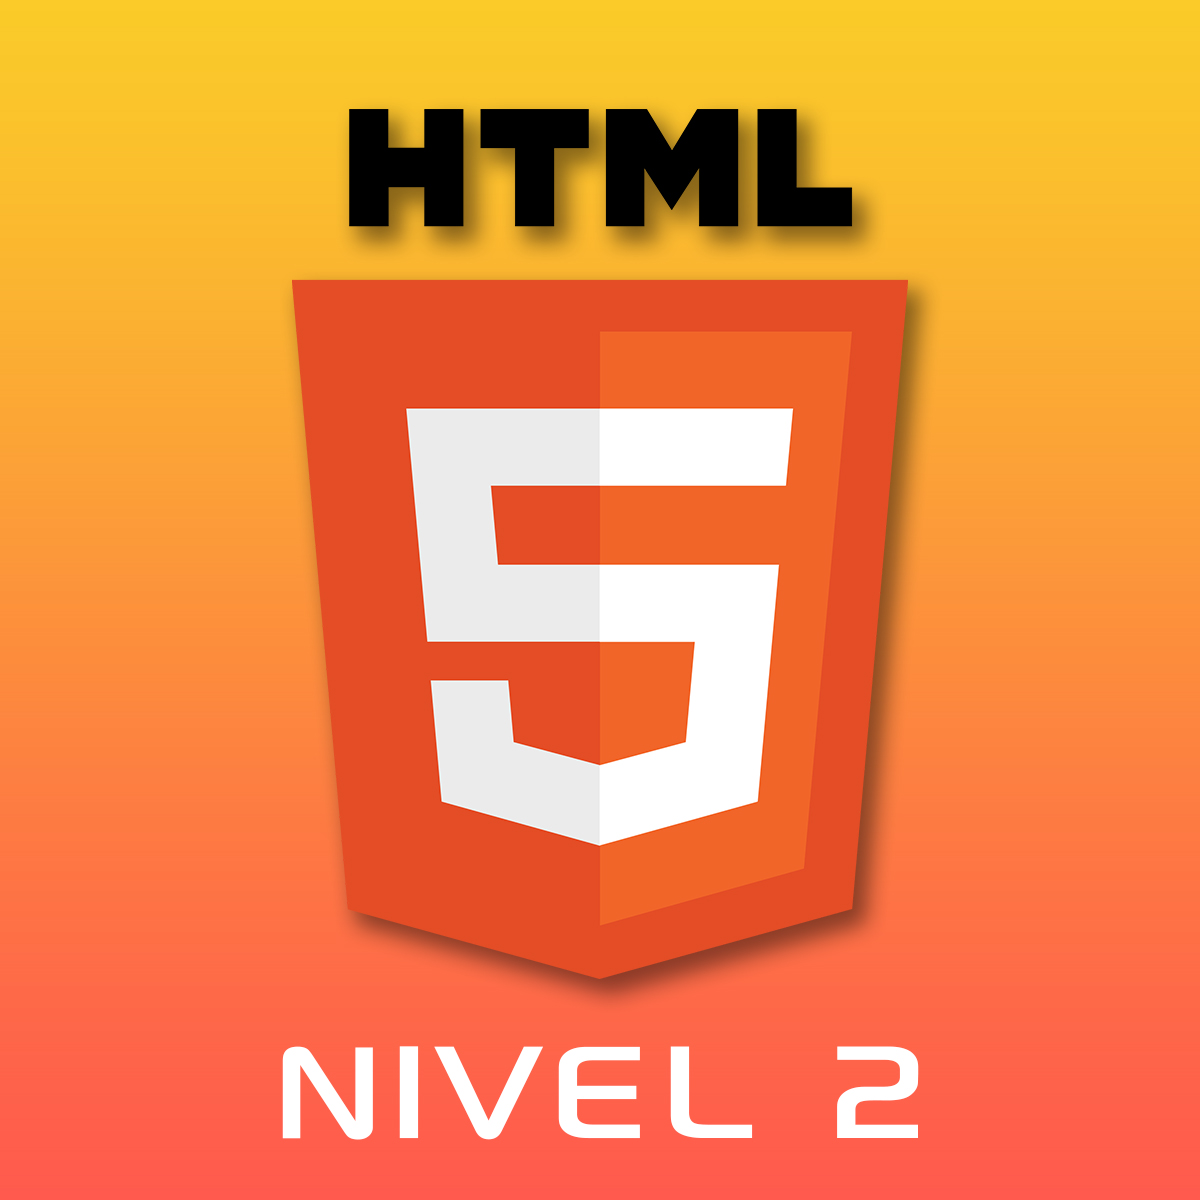 Course Image HTML5 Nivel 2 NUEVO